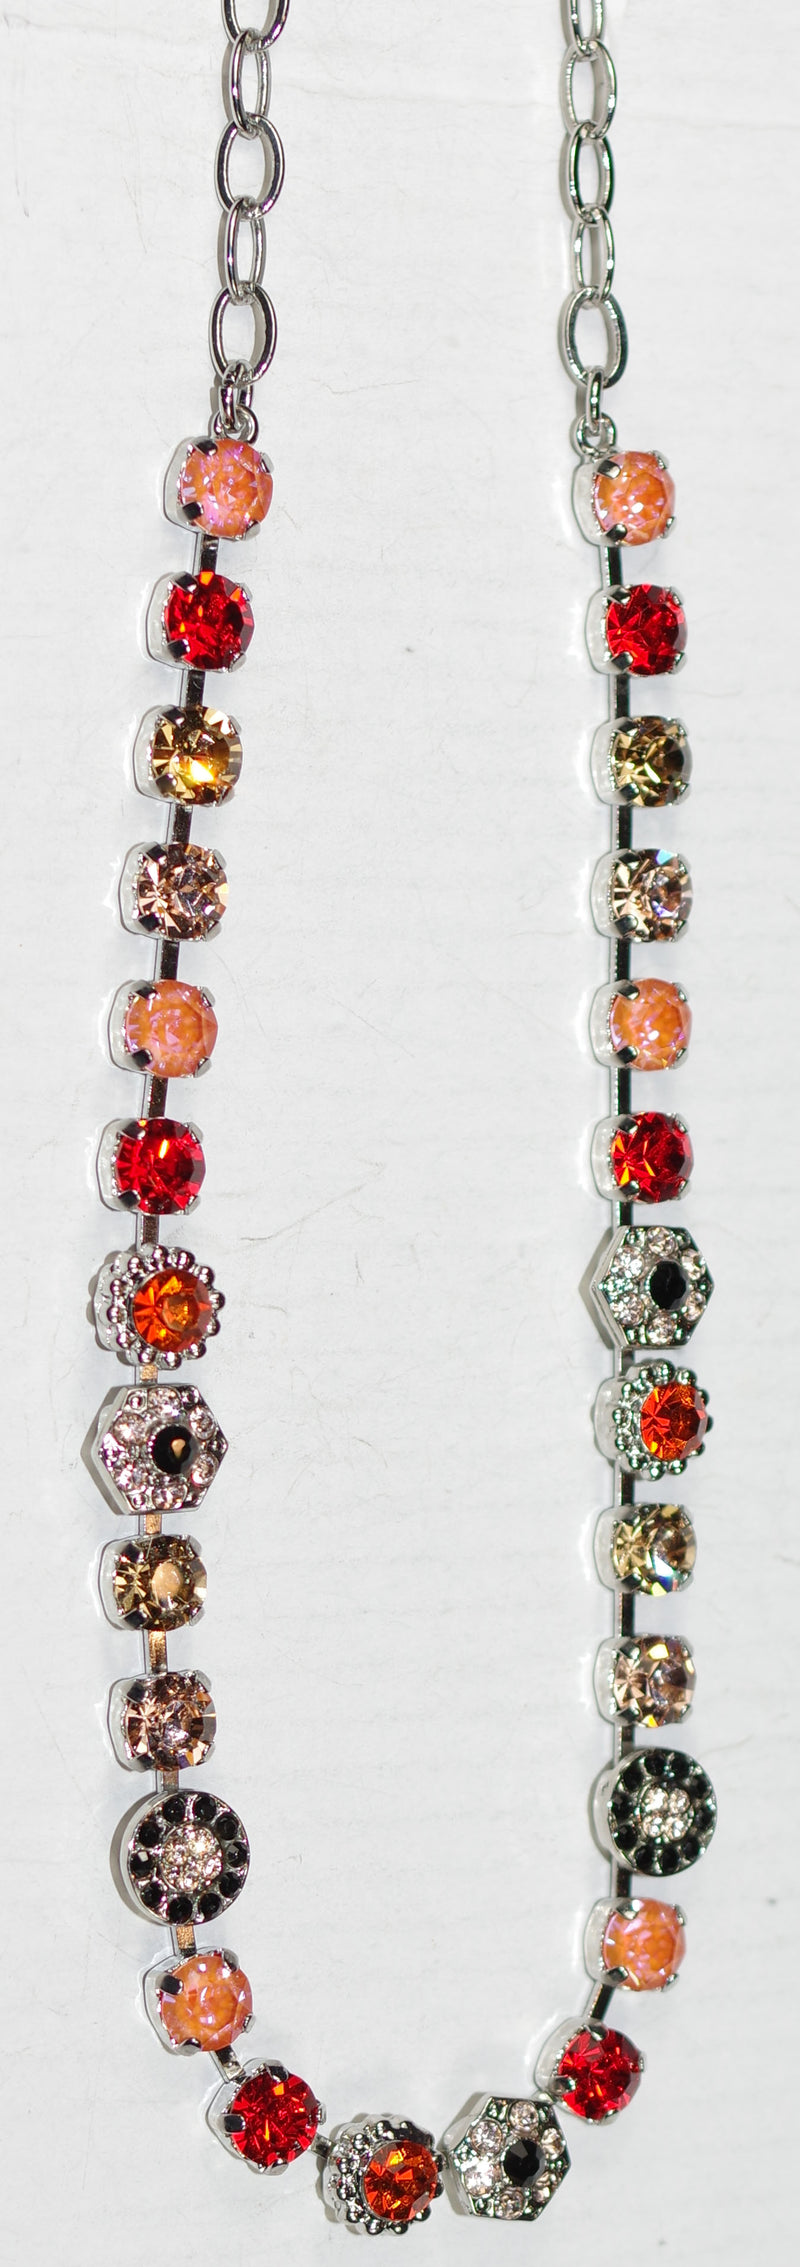 MARIANA NECKLACE MAGIC: orange, black, amber 1/4" stones in silver rhodium setting, adjustable chain